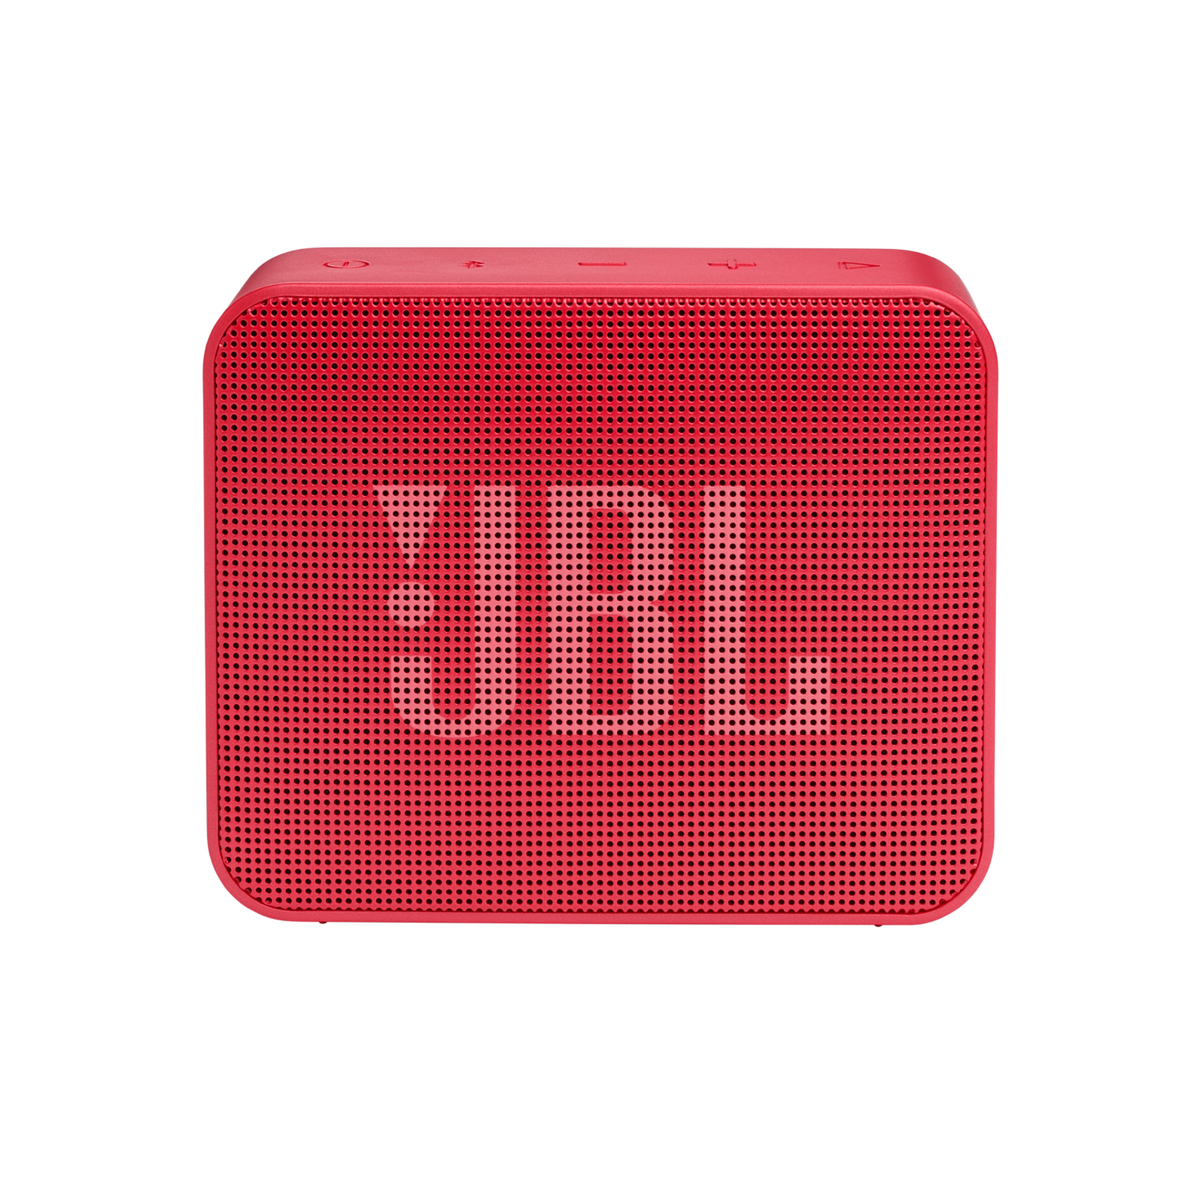 JBL Authentics 300, Haut-parleurs portatif